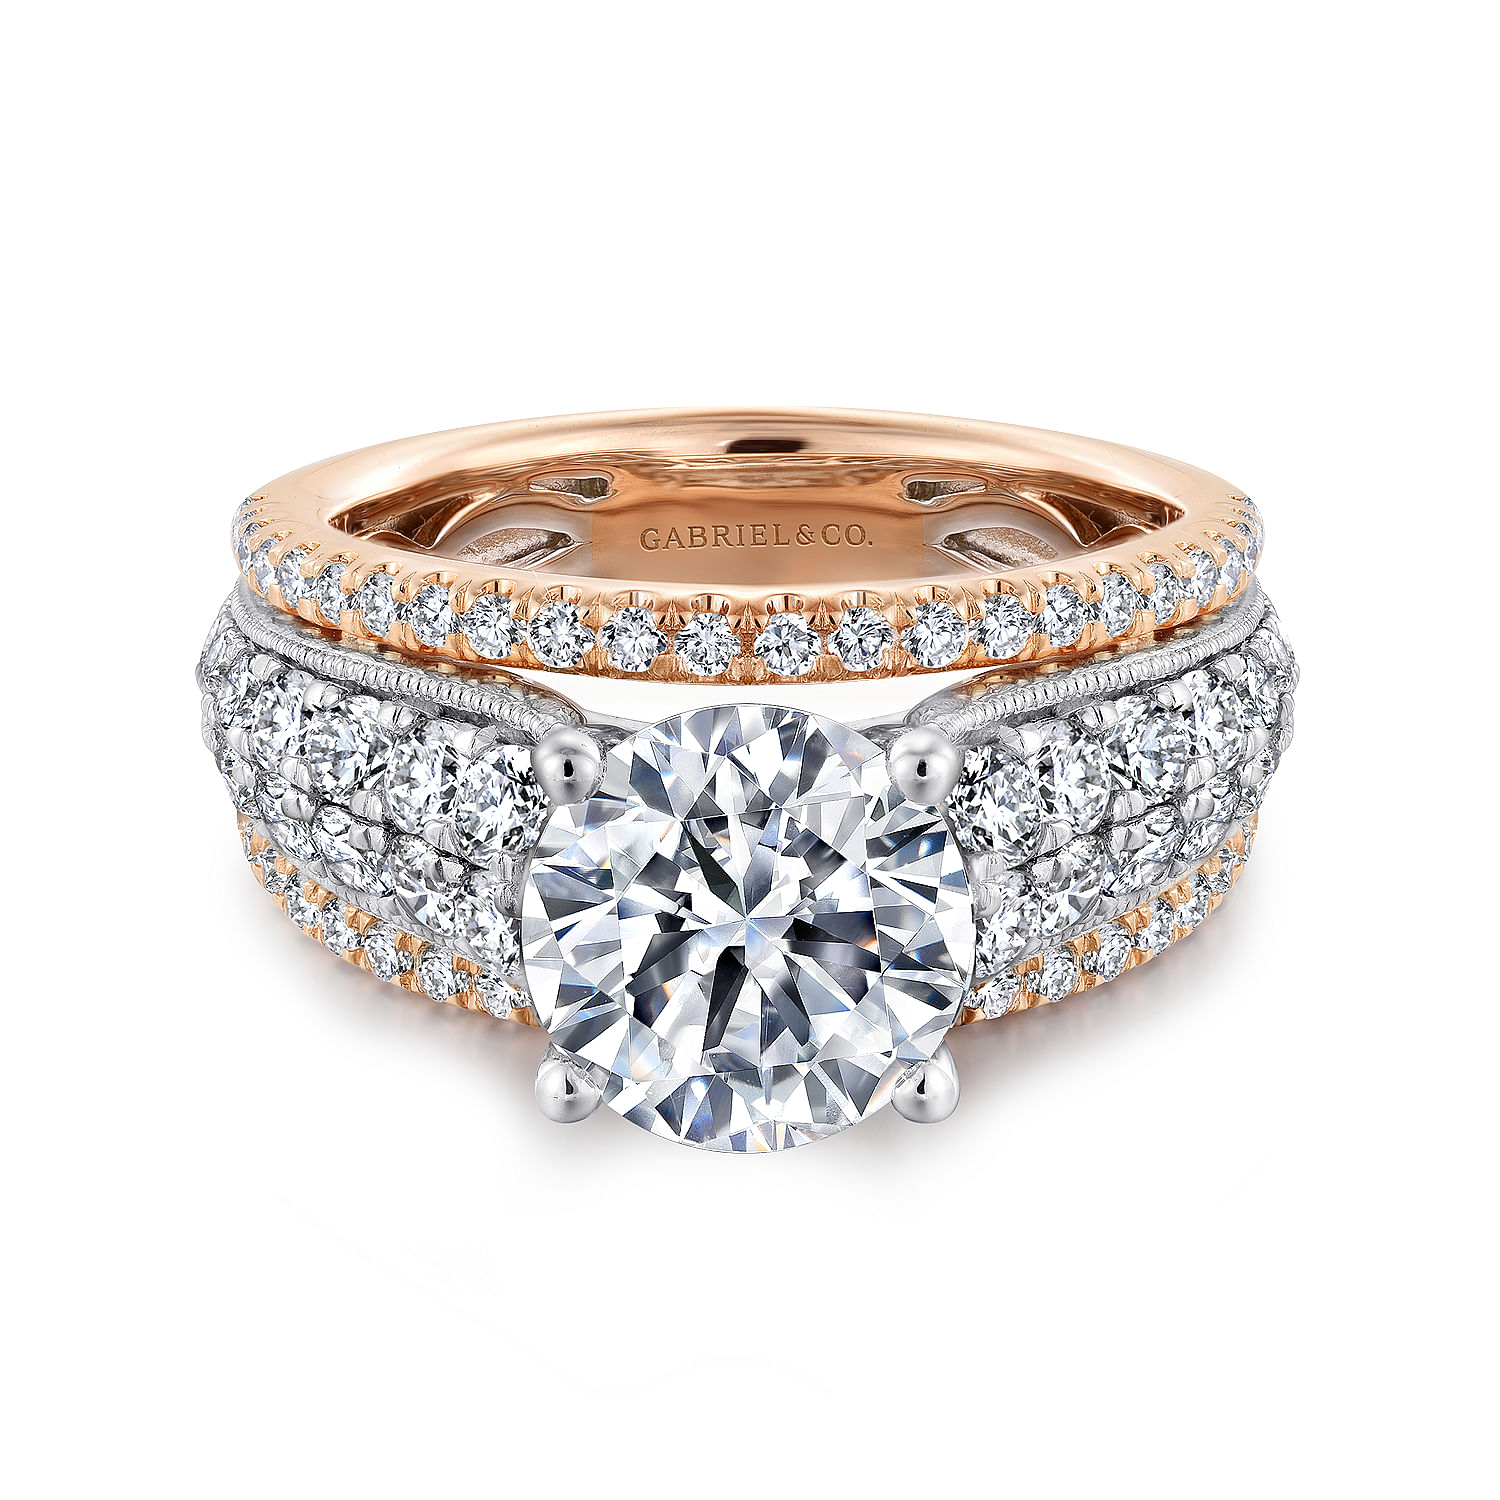 Jessa---14K-White-Rose-Gold-Round-Diamond-Engagement-Ring1